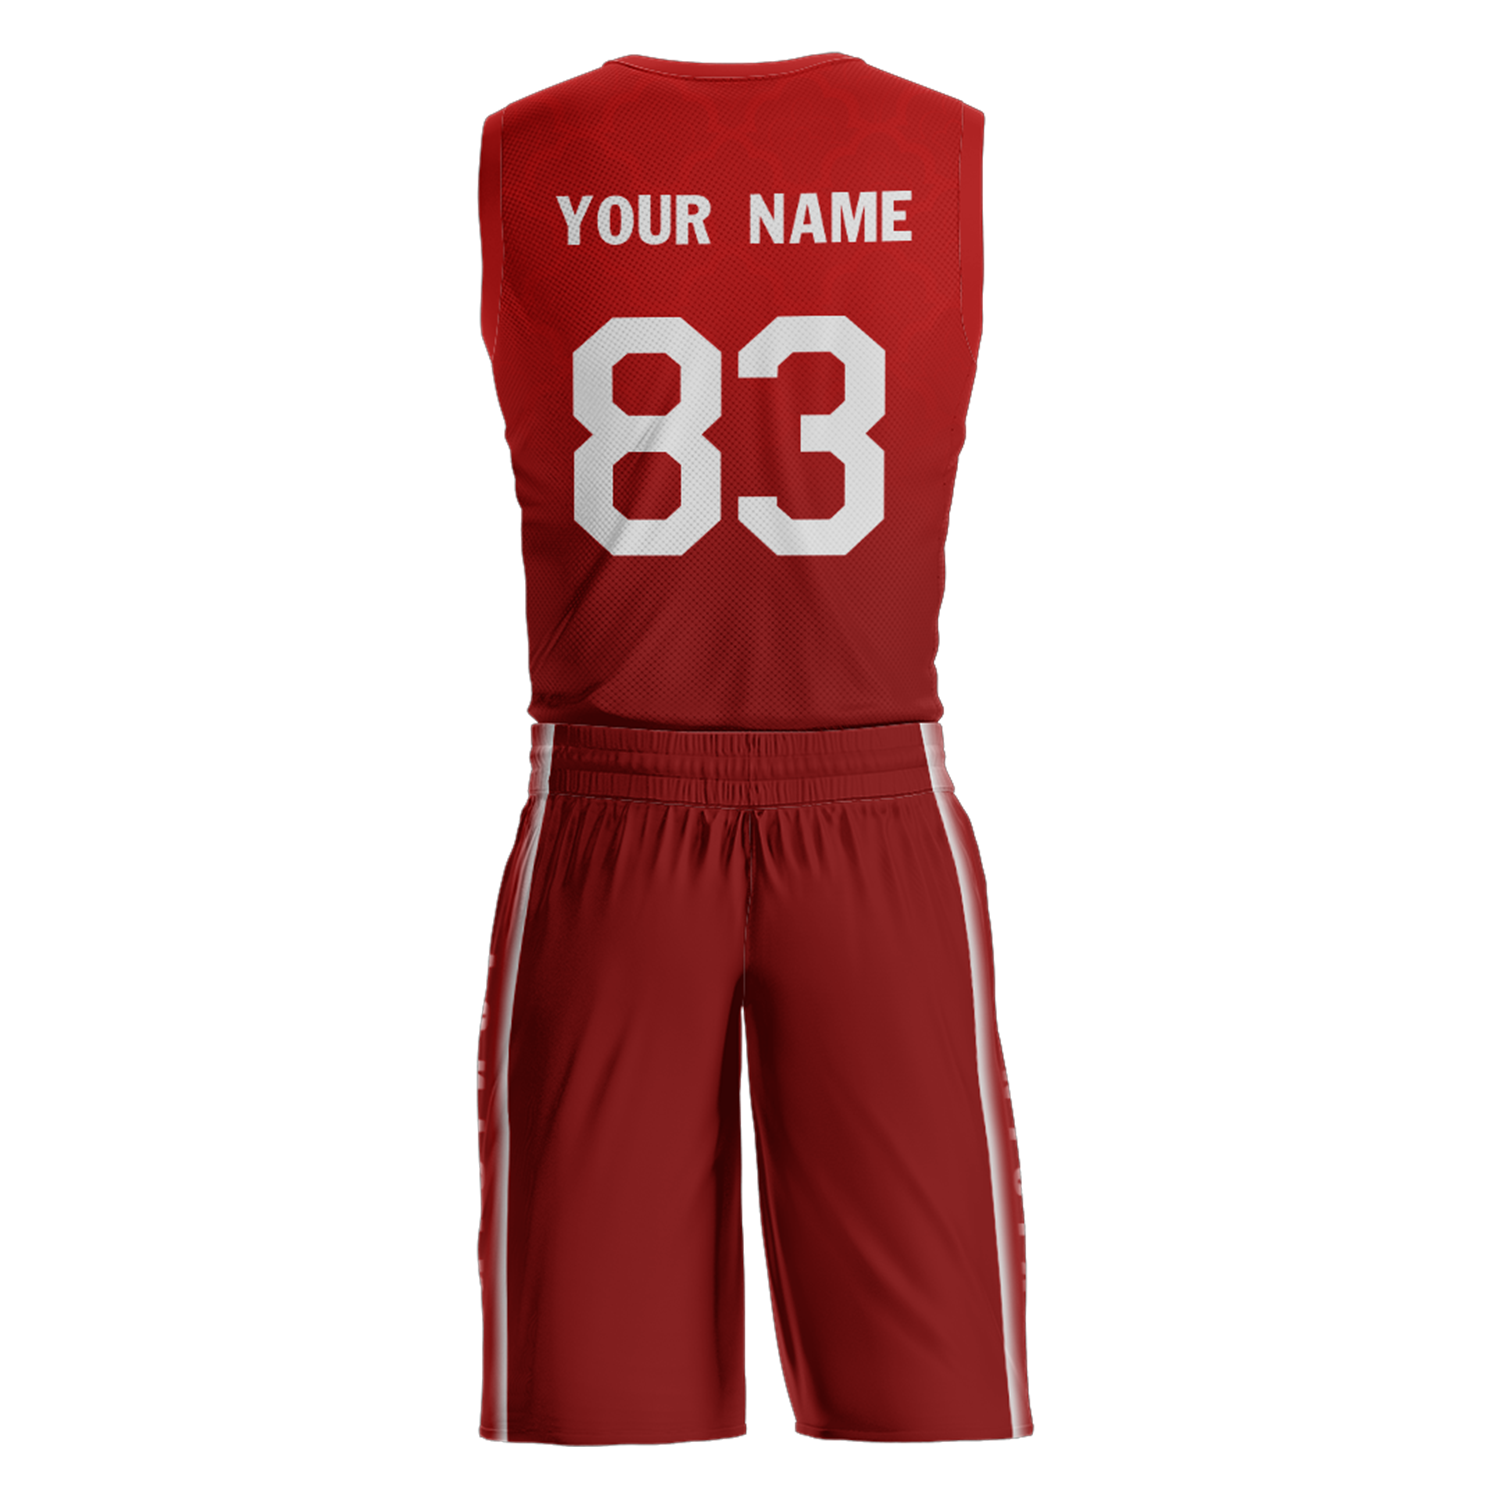 Ternos de basquete personalizados da equipe da Tunísia